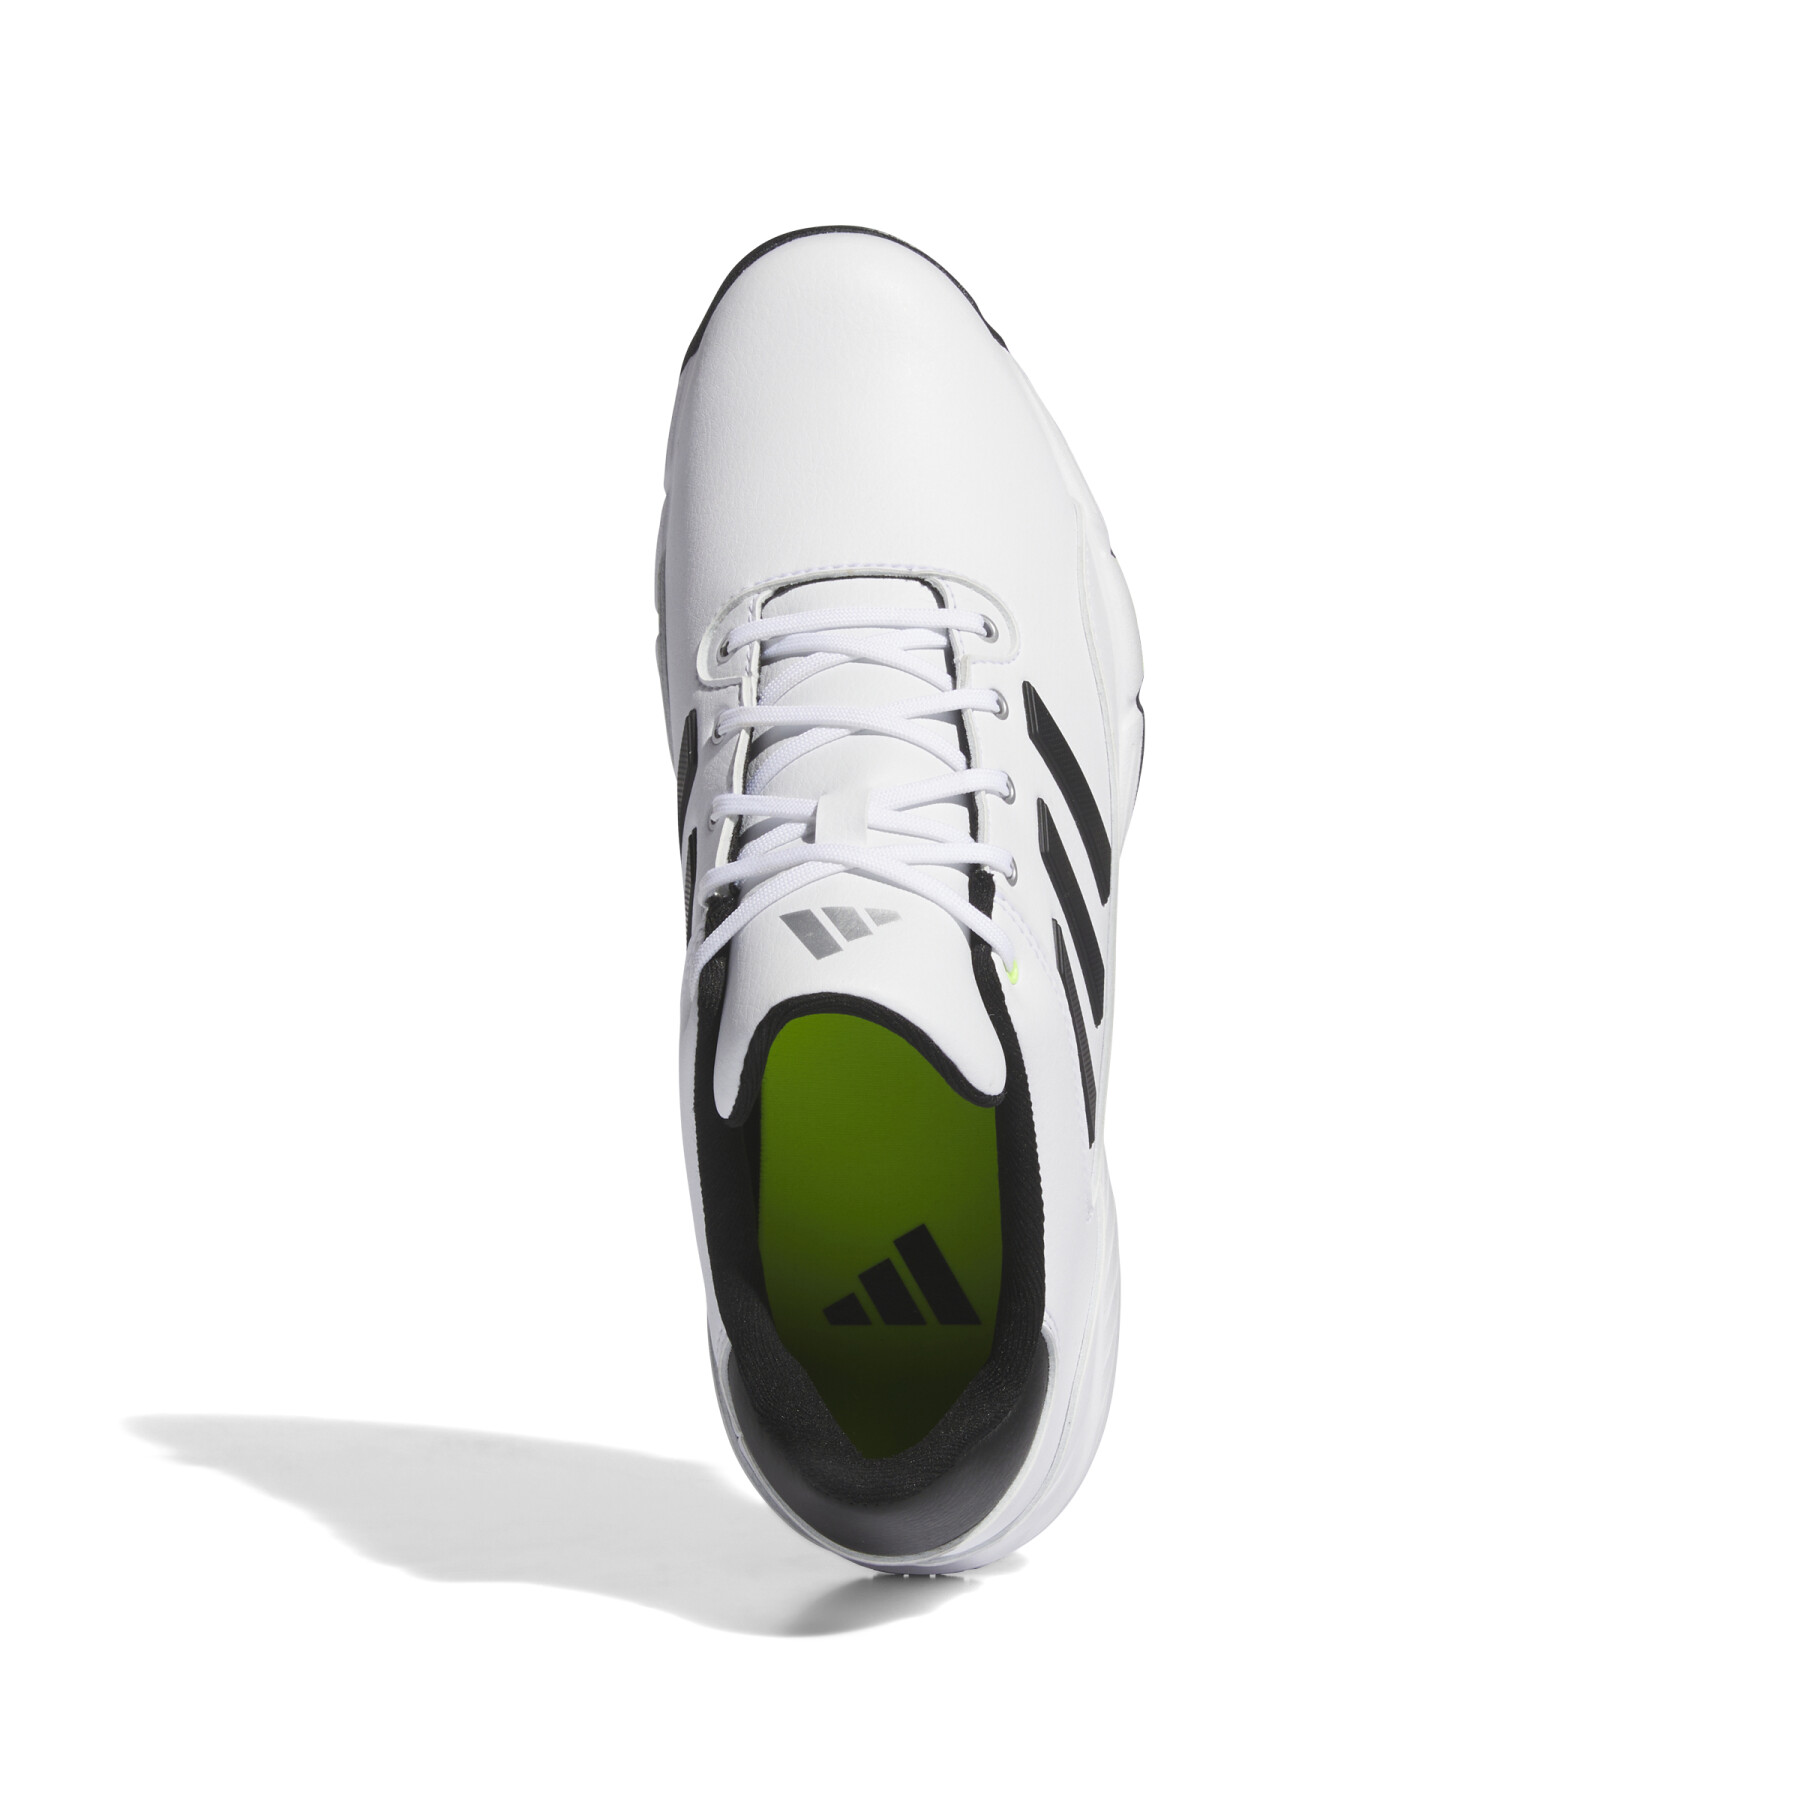 Chaussures de golf avec crampons adidas Golflite Max 24